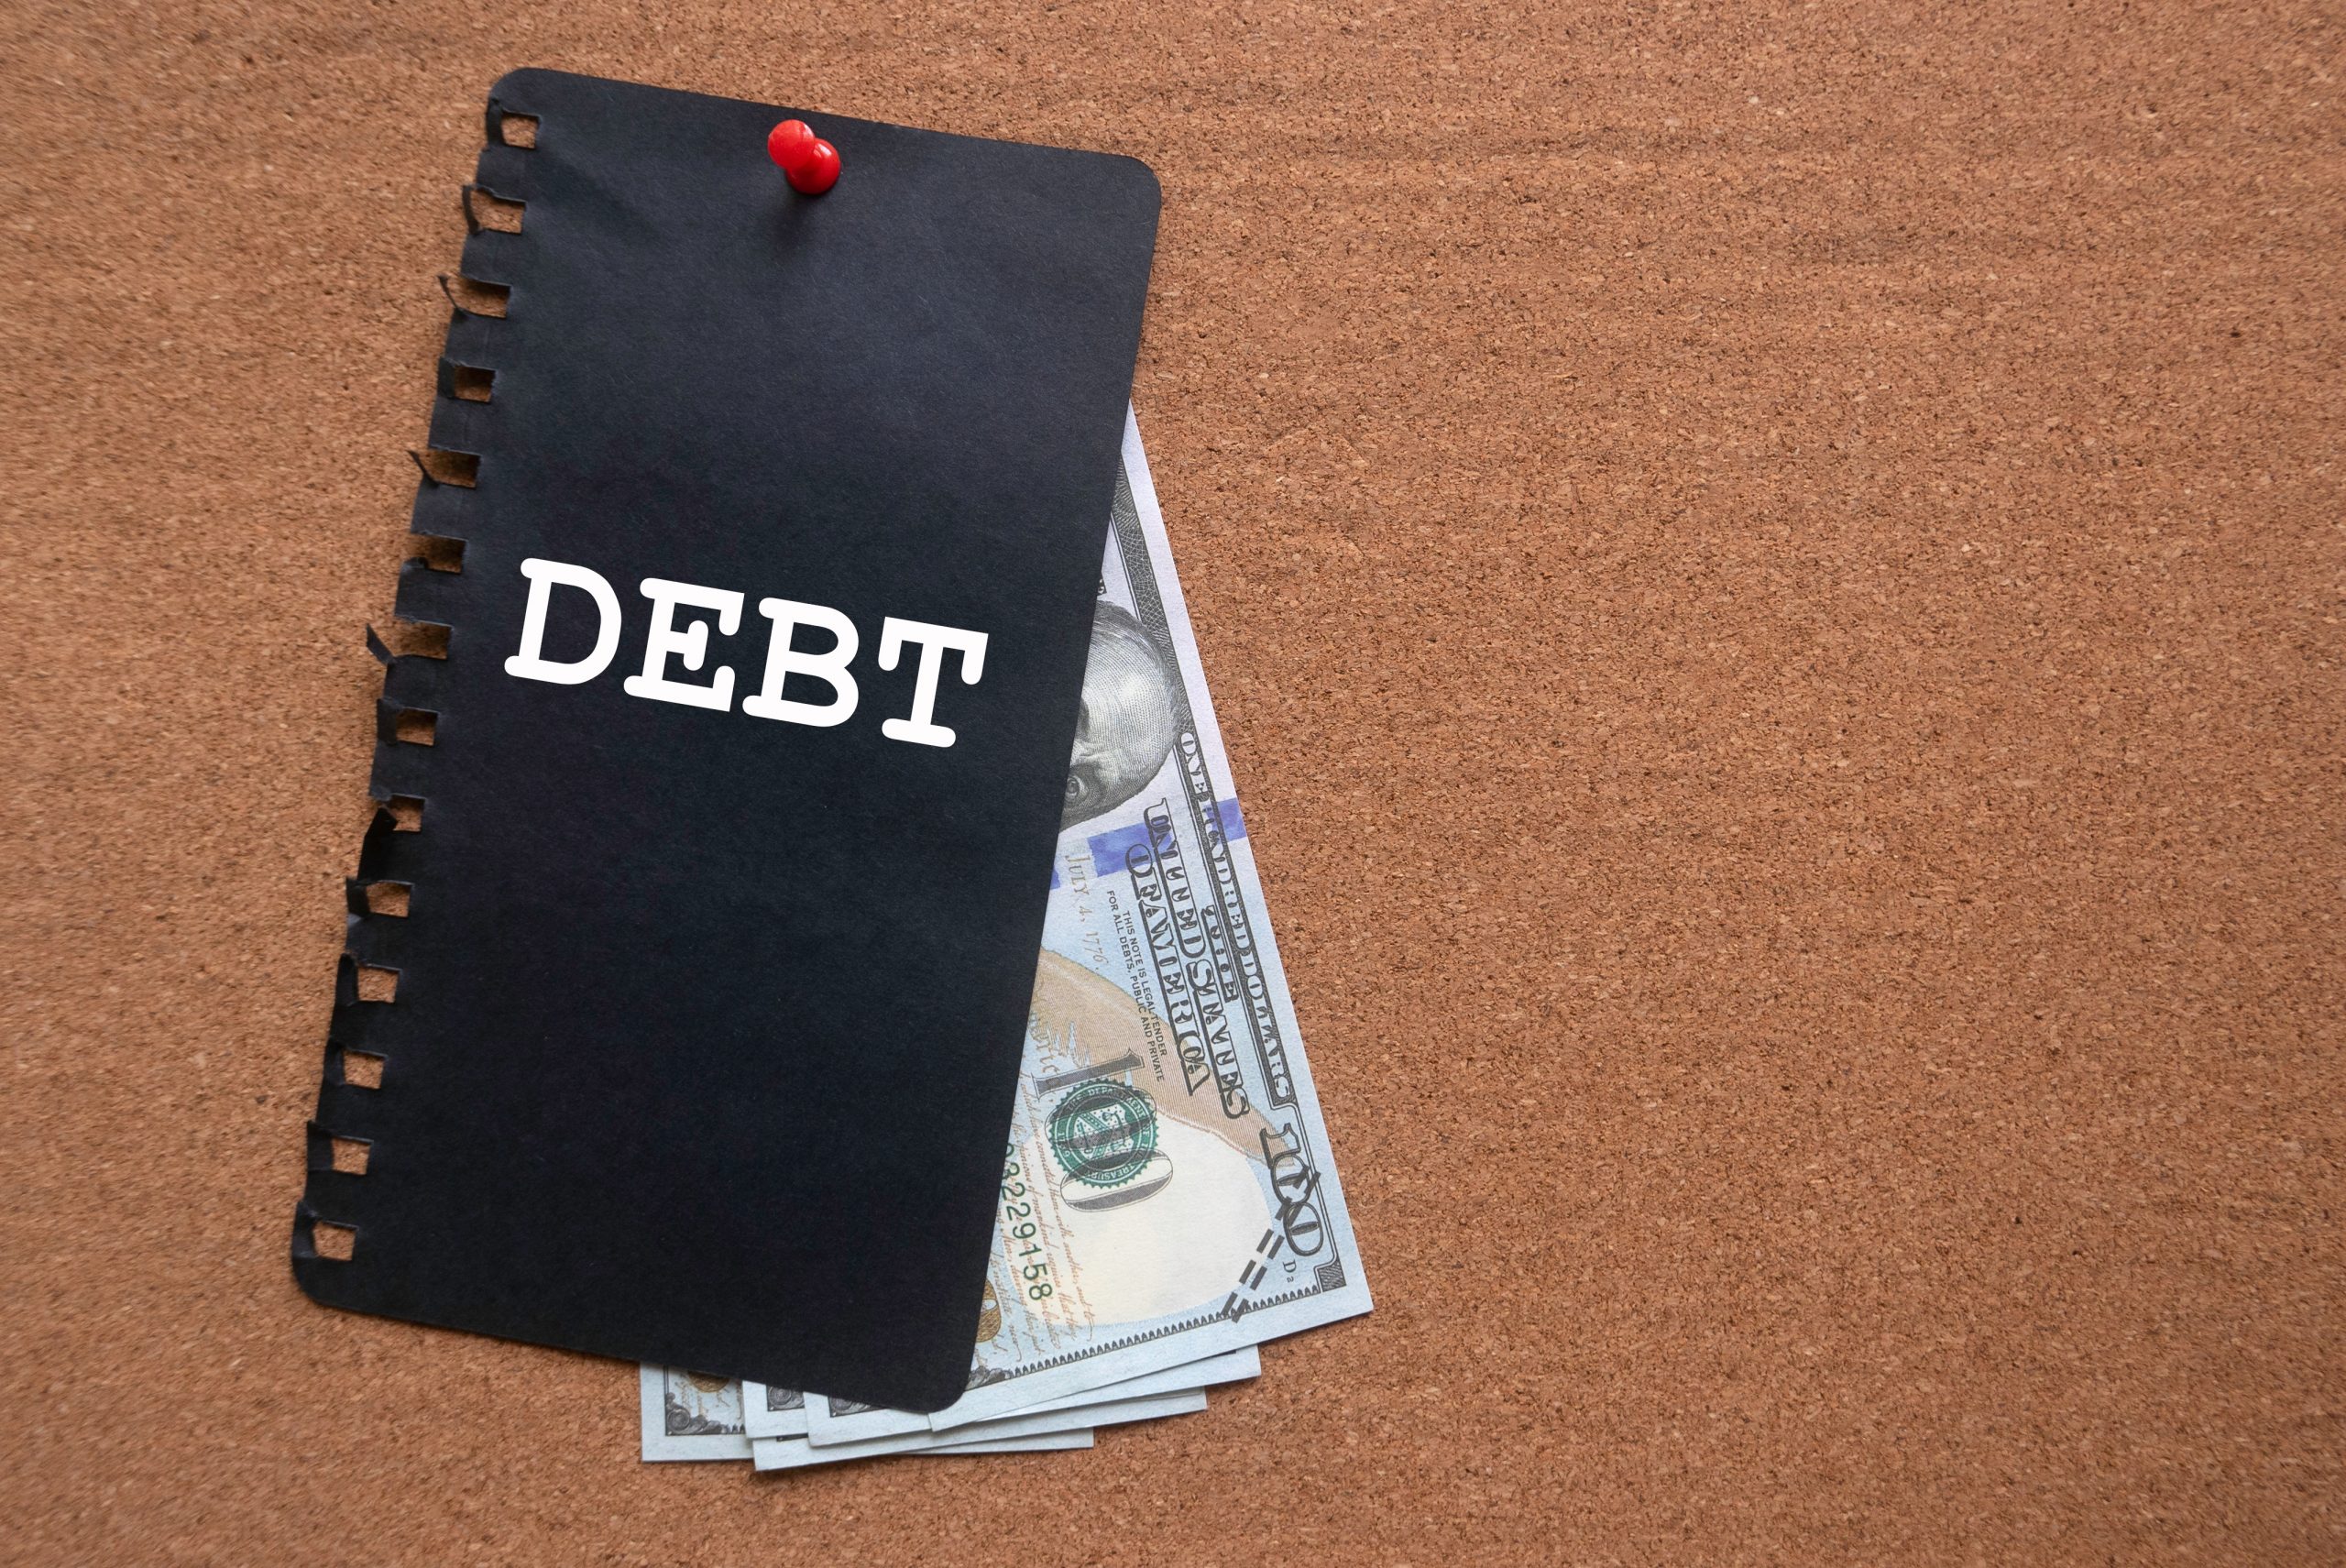 Managing Debt